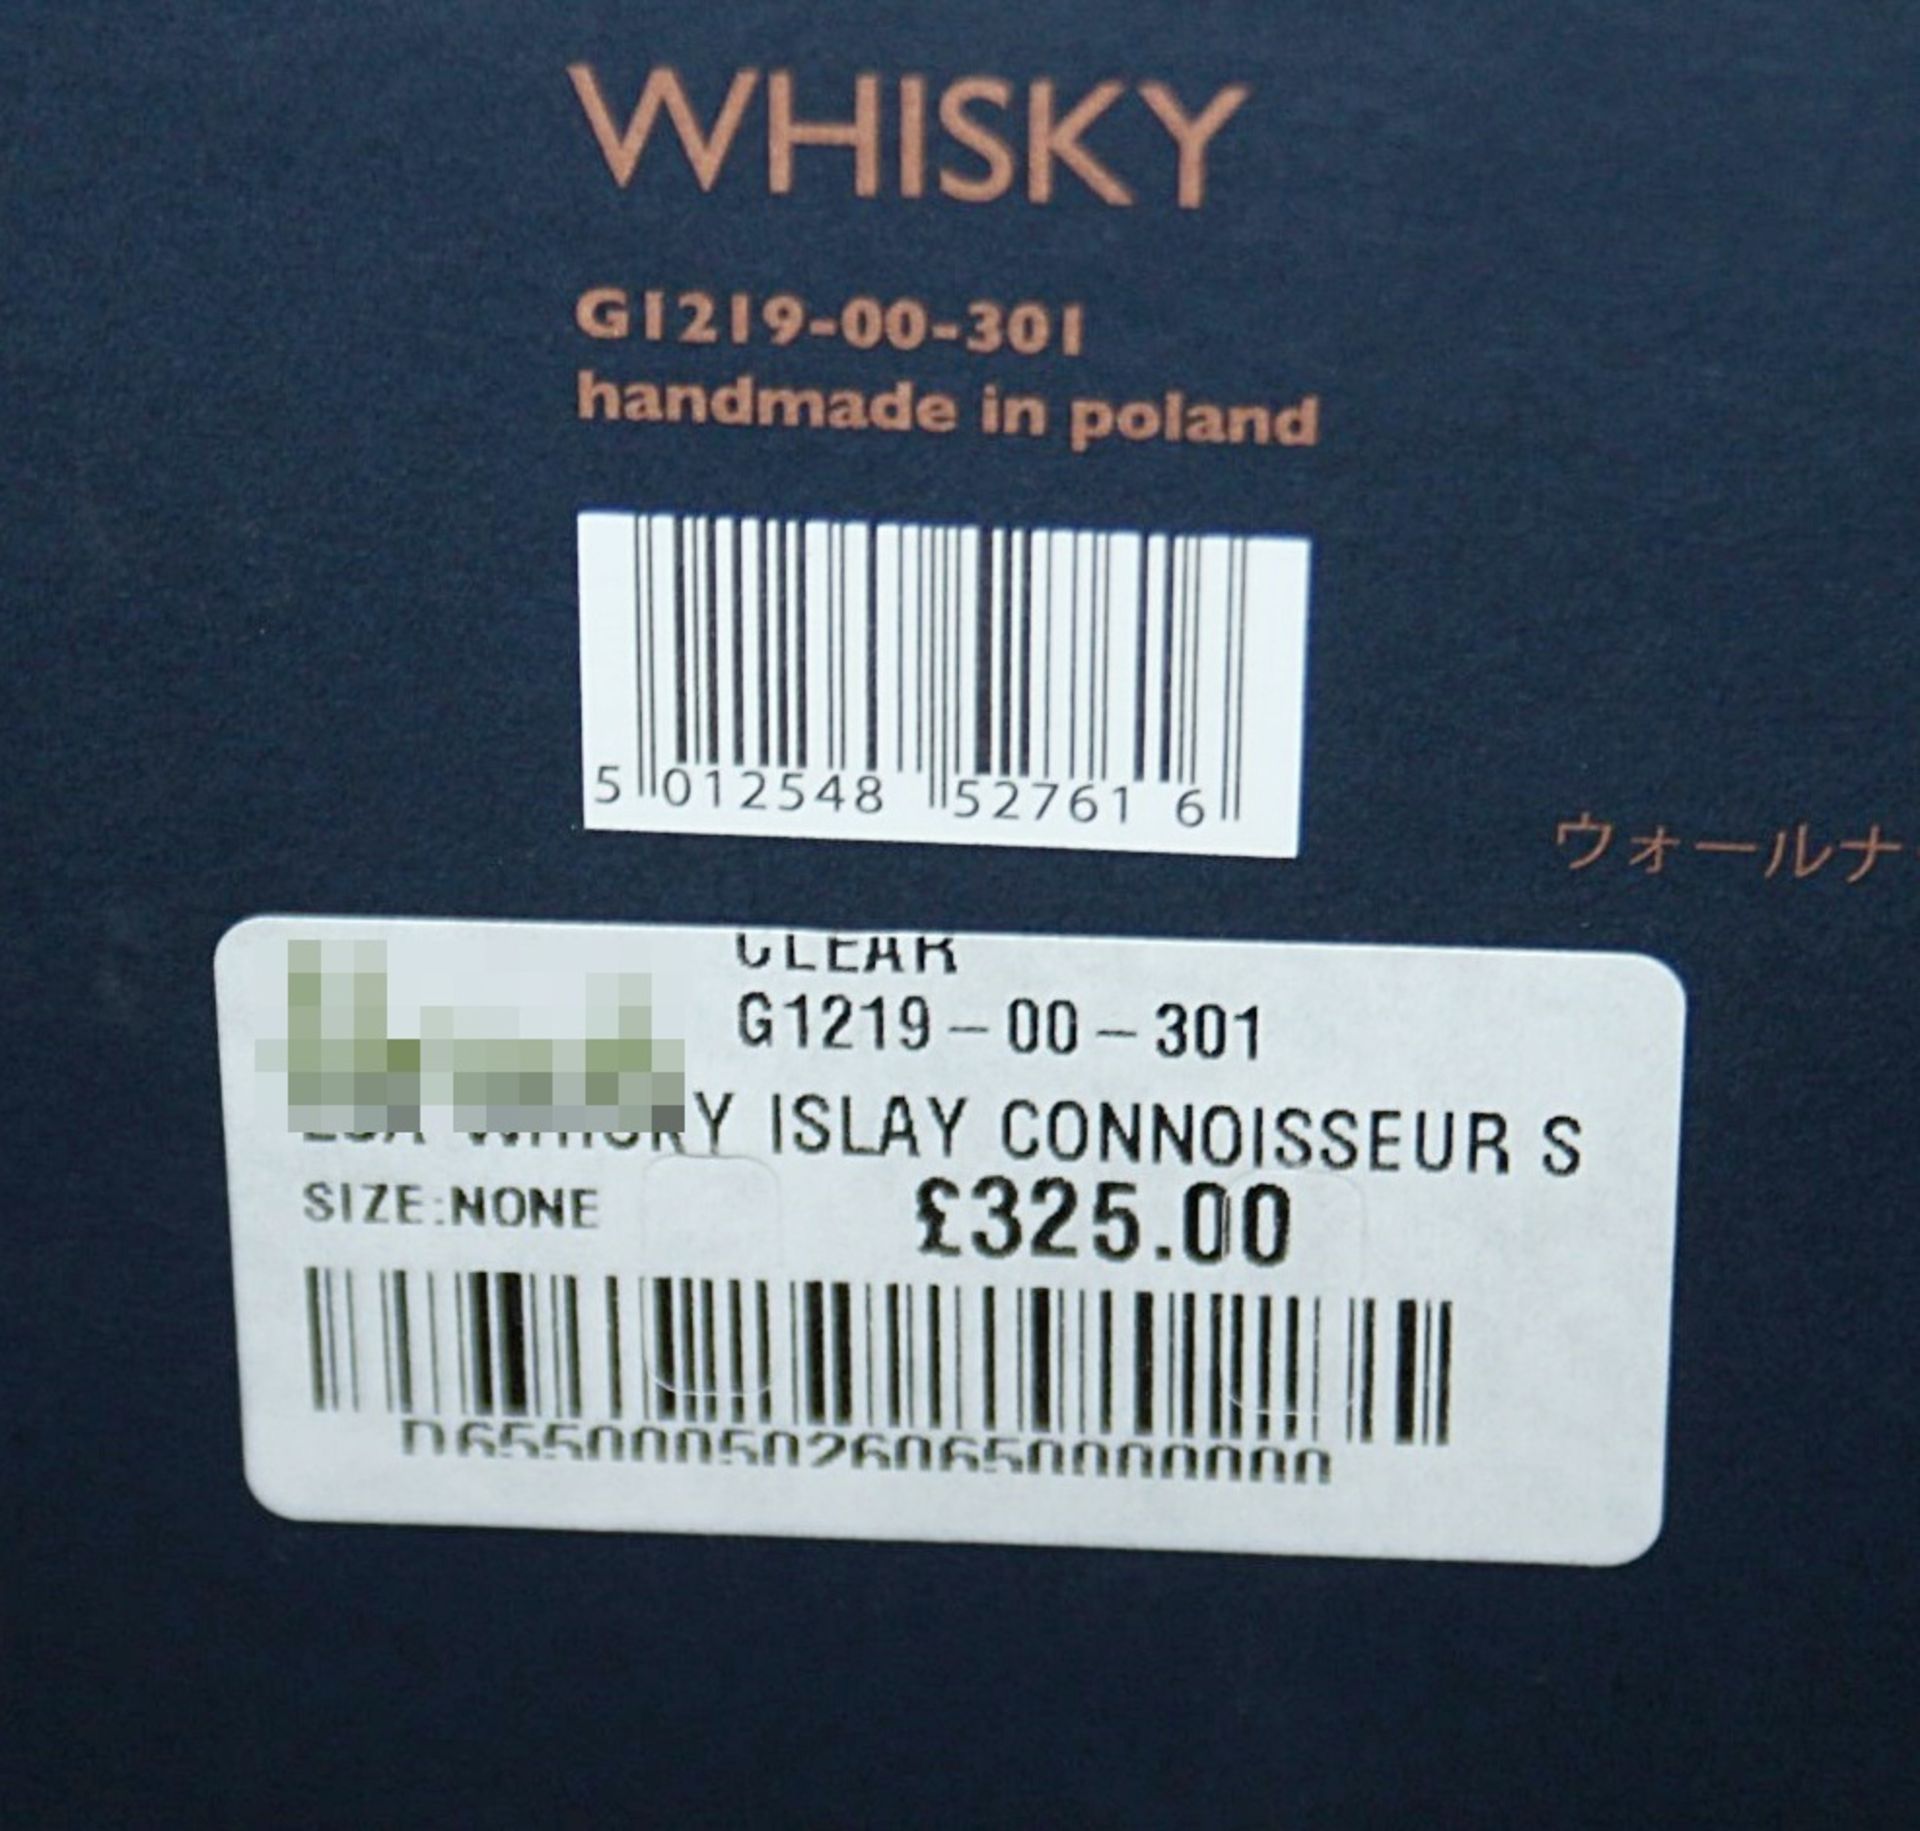 1 x LSA INTERNATIONAL 'Islay' Whisky Connoisseur Set - Original Price £325.00 - Unused Boxed Stock - Image 5 of 16